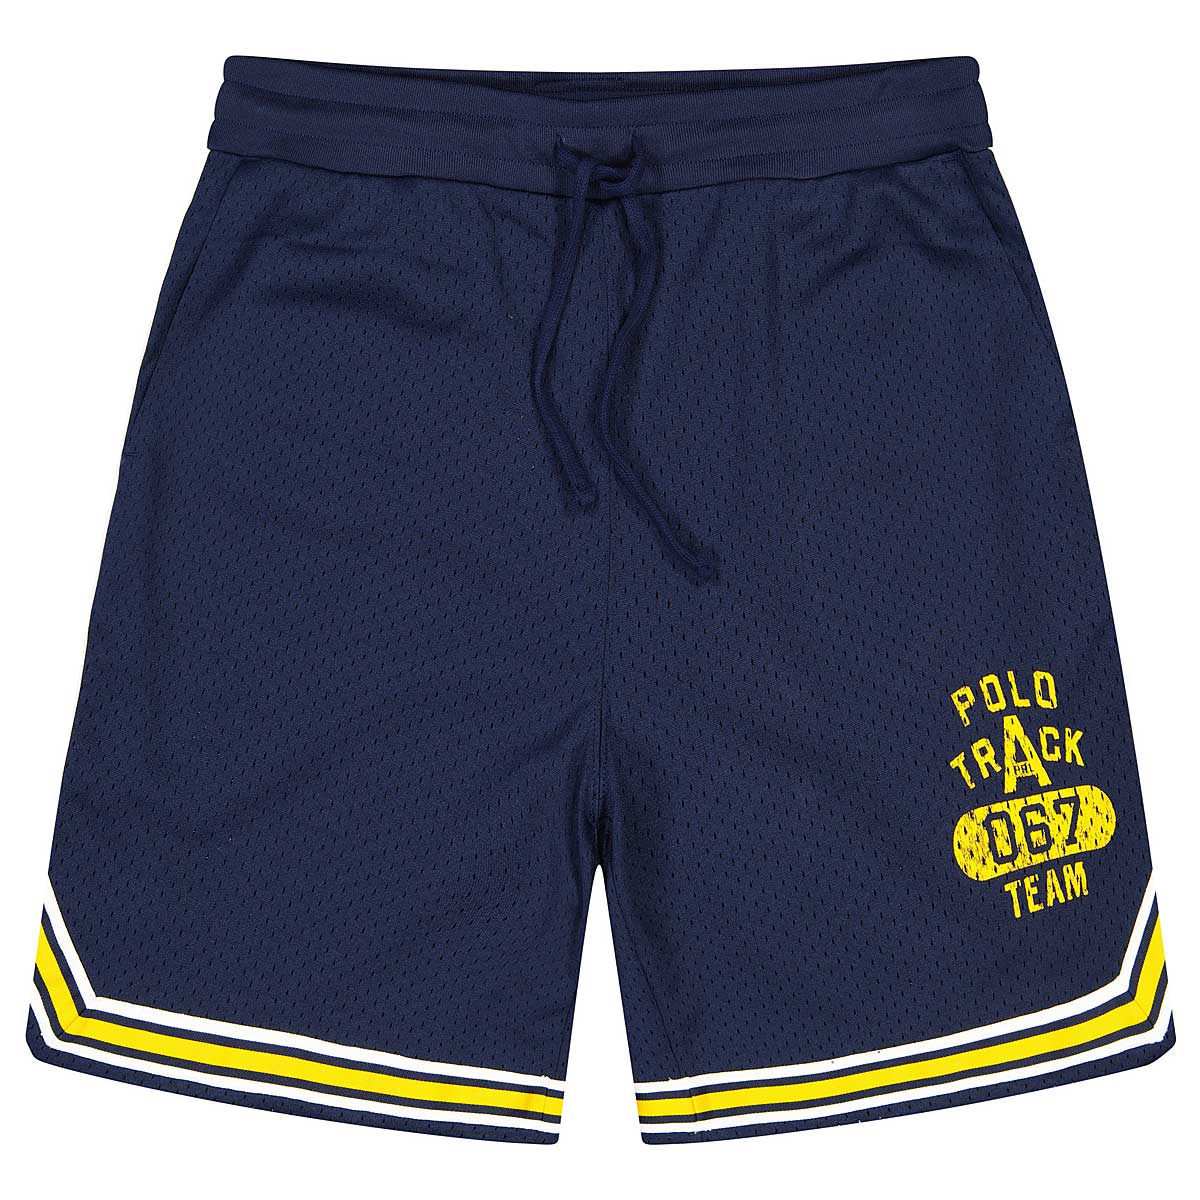 Polo Ralph Lauren Shorts, Cruise Navy